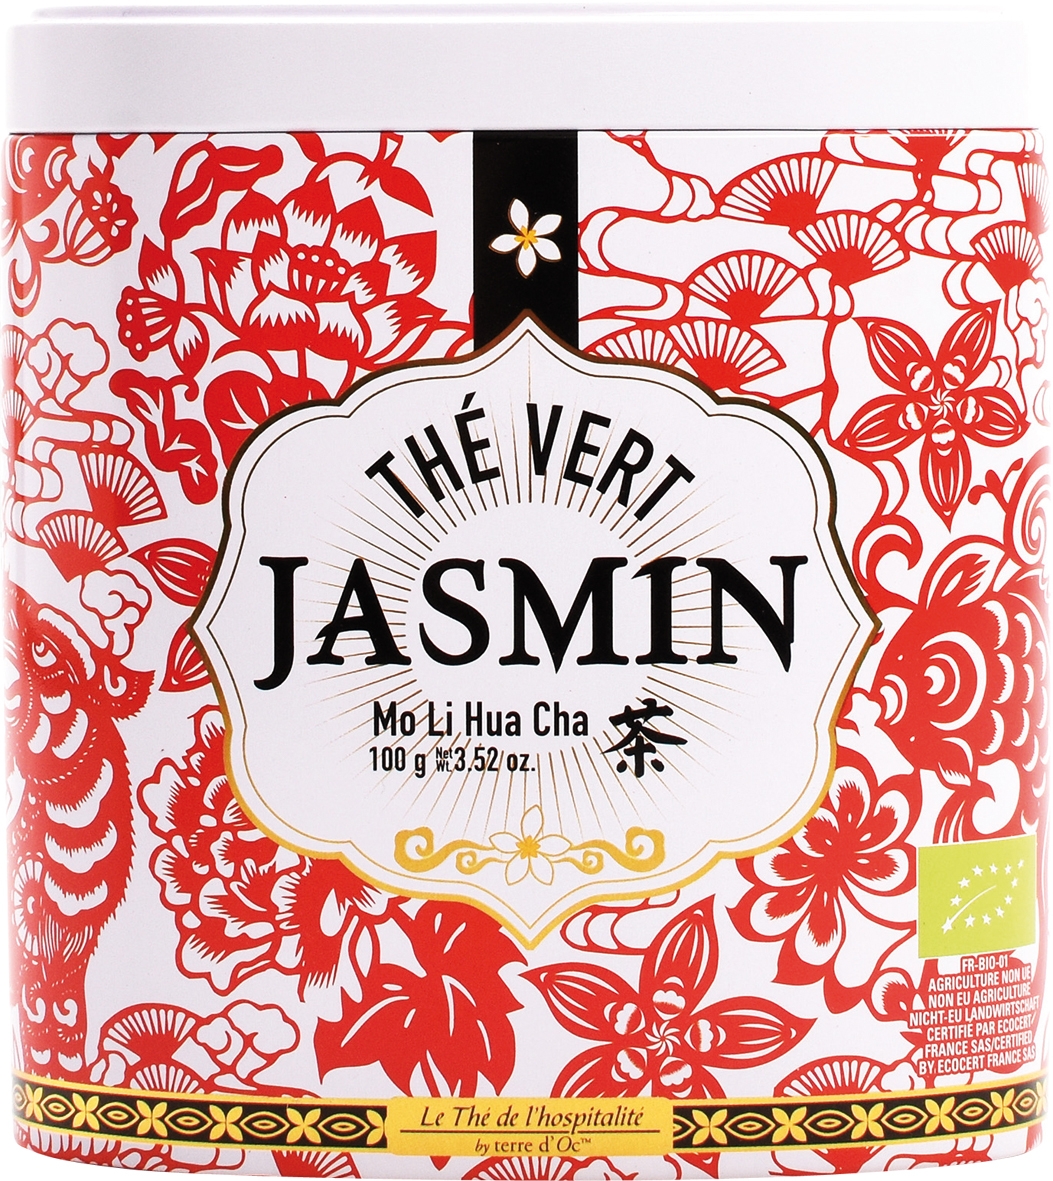 Green Tea "Jasmine" - Organic